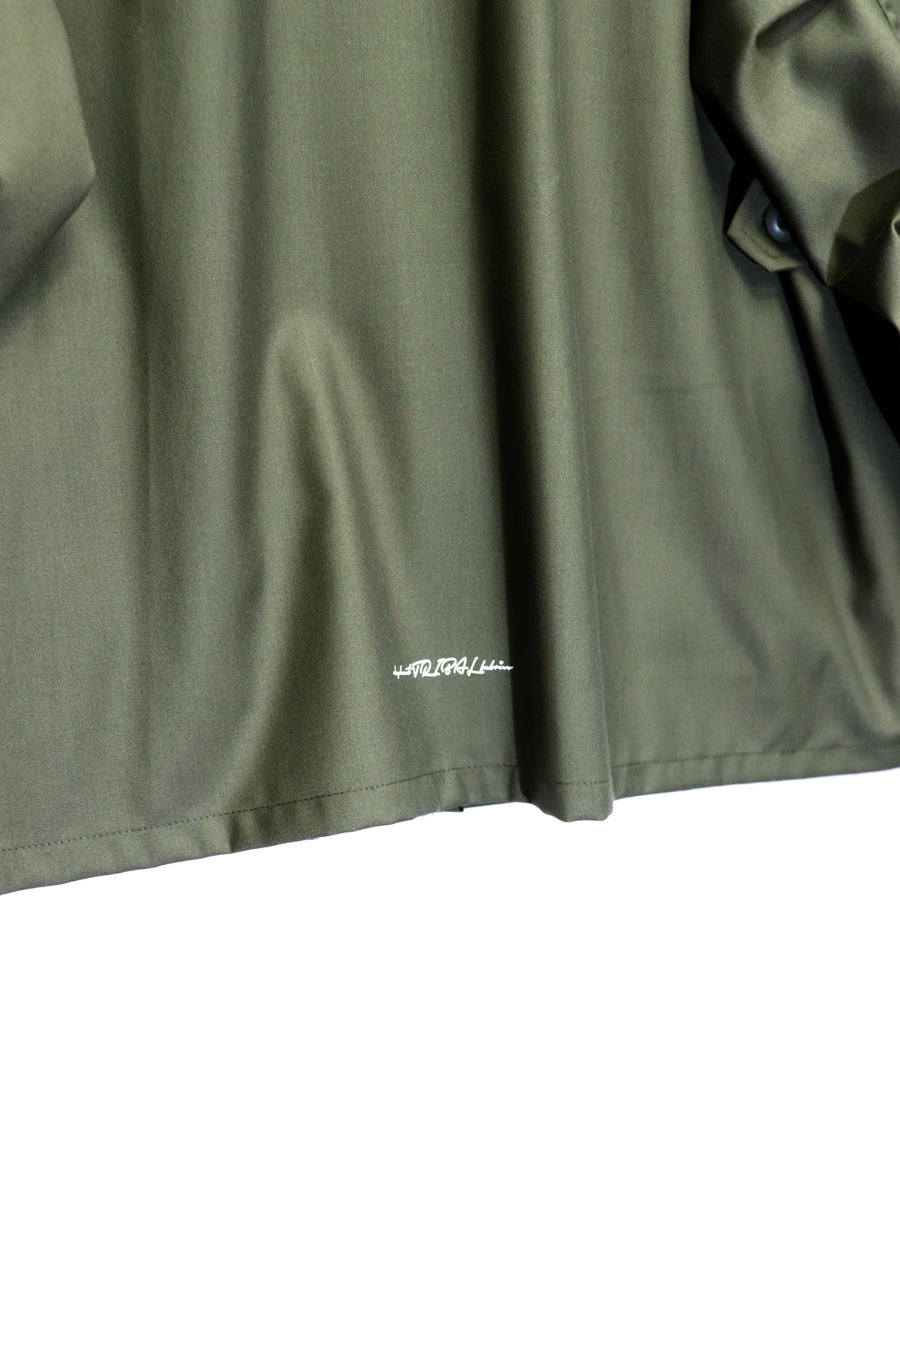 elephant TRIBAL fabrics  Reversible fatigue JKT（Khaki）